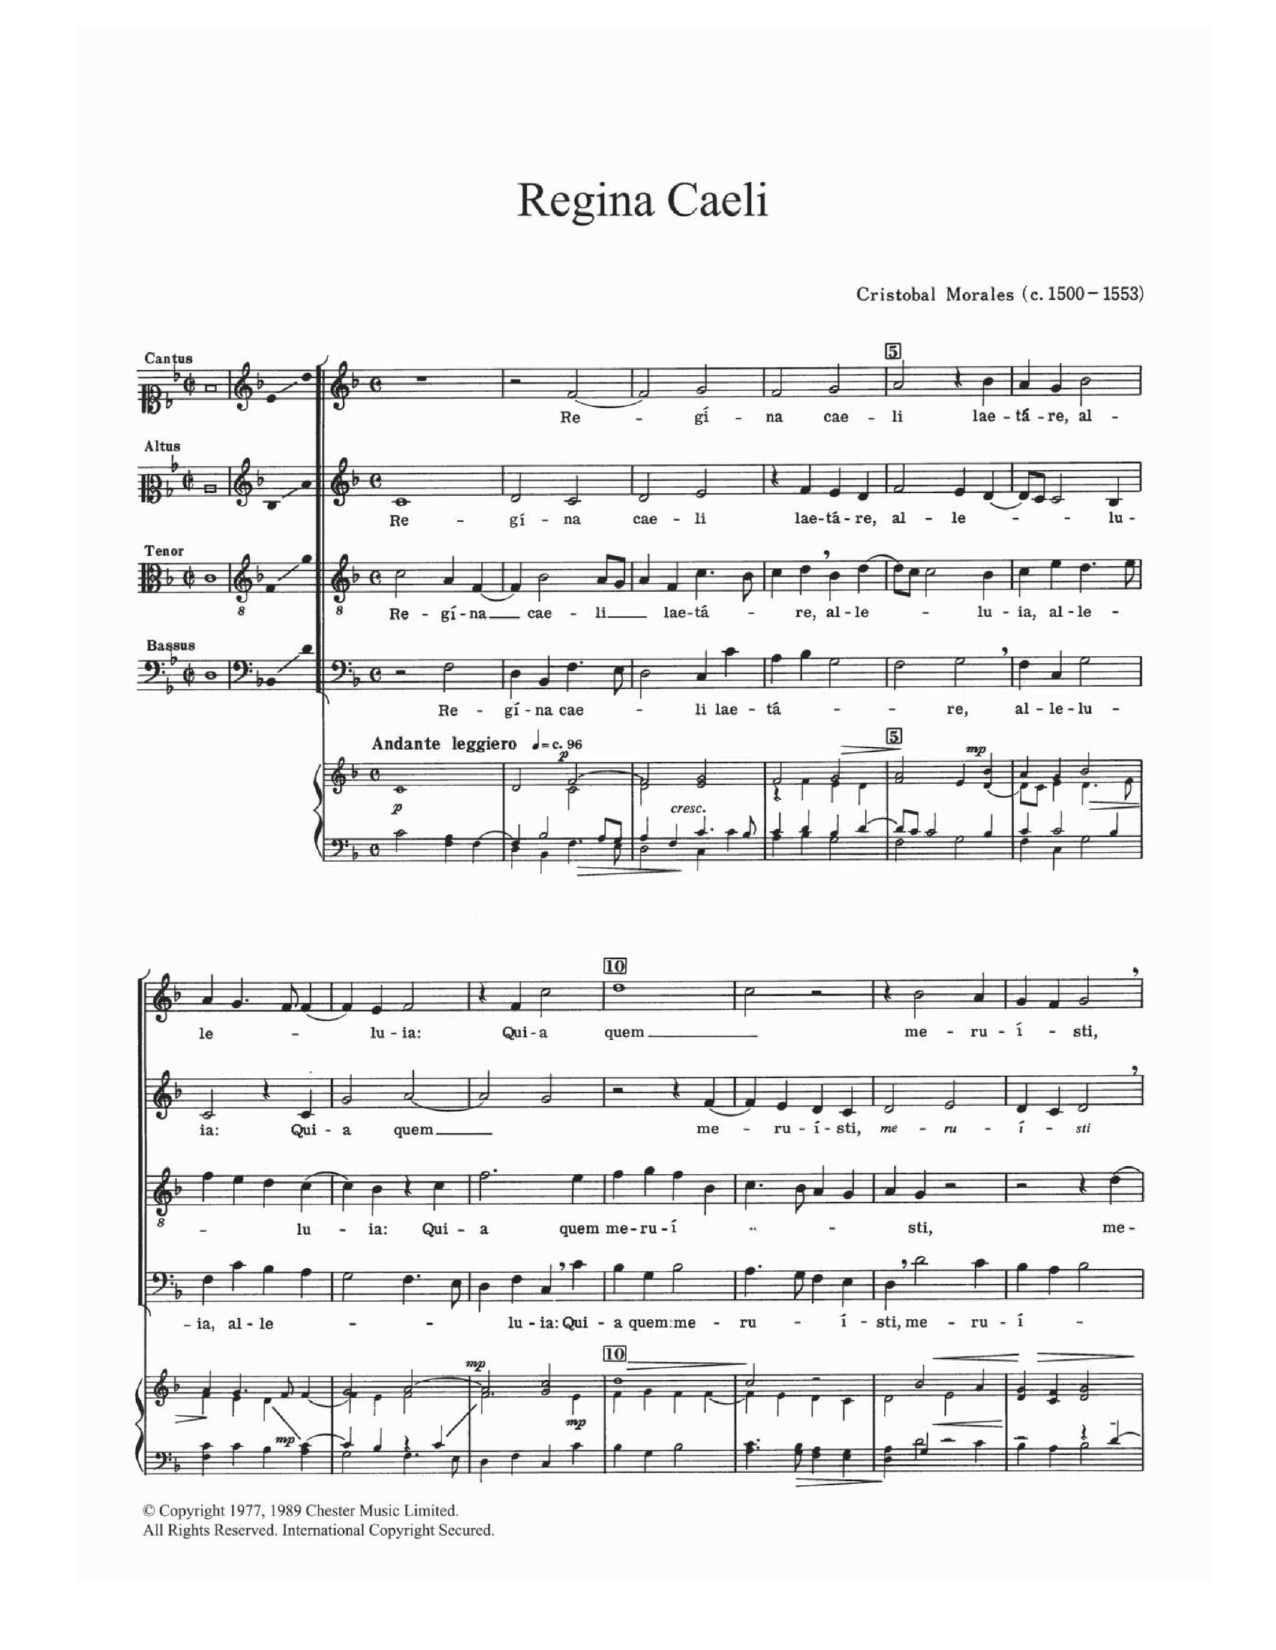 Cristobal de Morales Regina Caeli Sheet Music Notes & Chords for SATB - Download or Print PDF